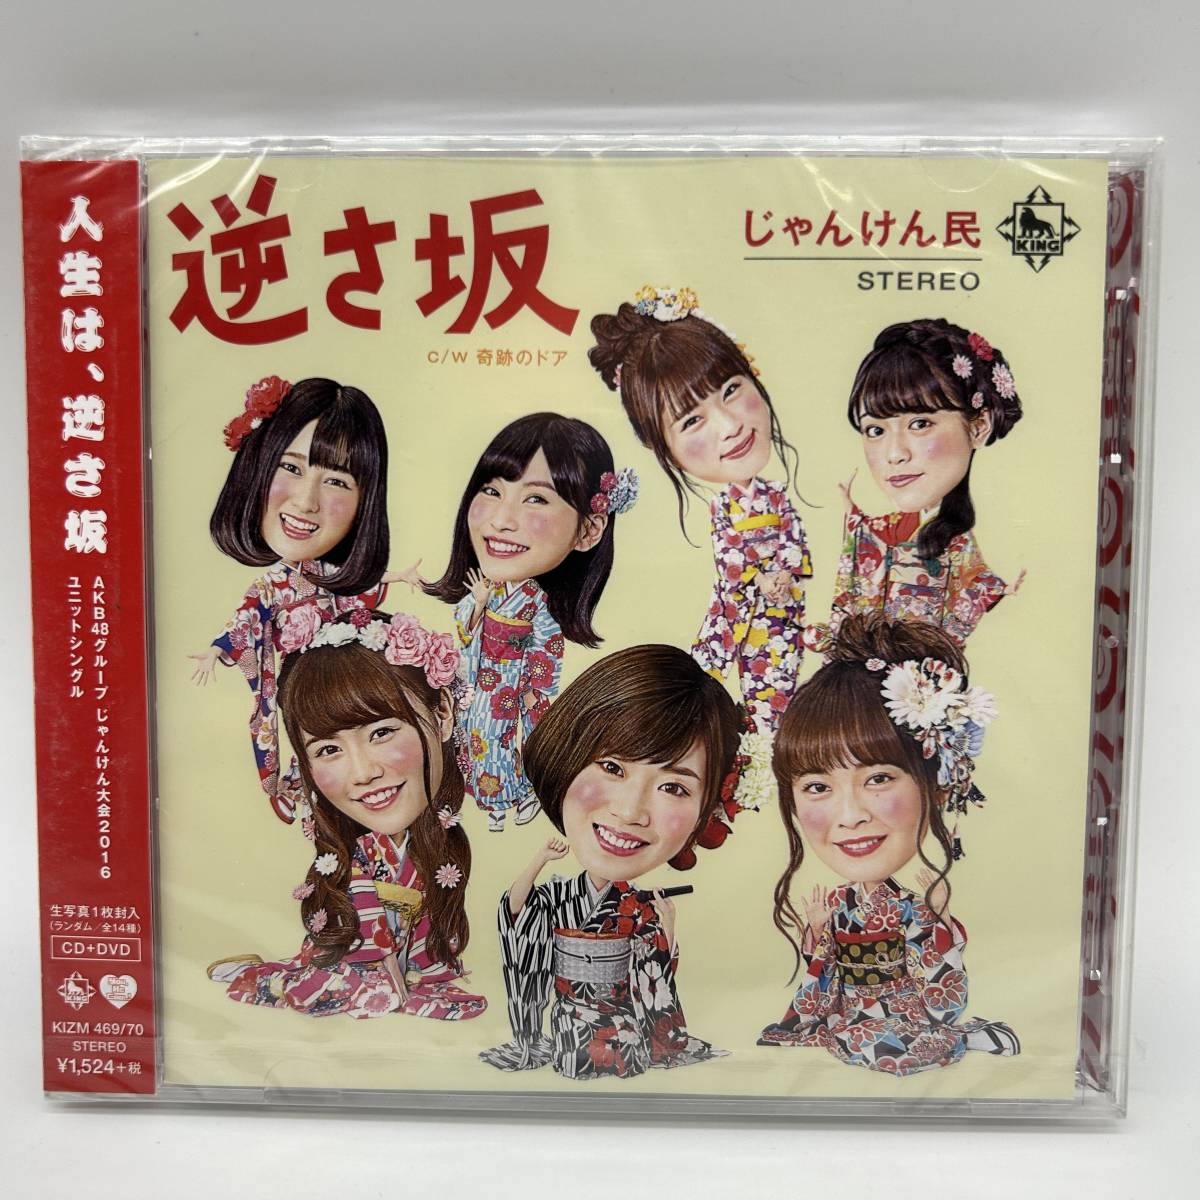 AKB48じゃんけんユニットシングル「逆さ坂」 (CD+DVD) AKBじゃんけんユニット A1621_画像1